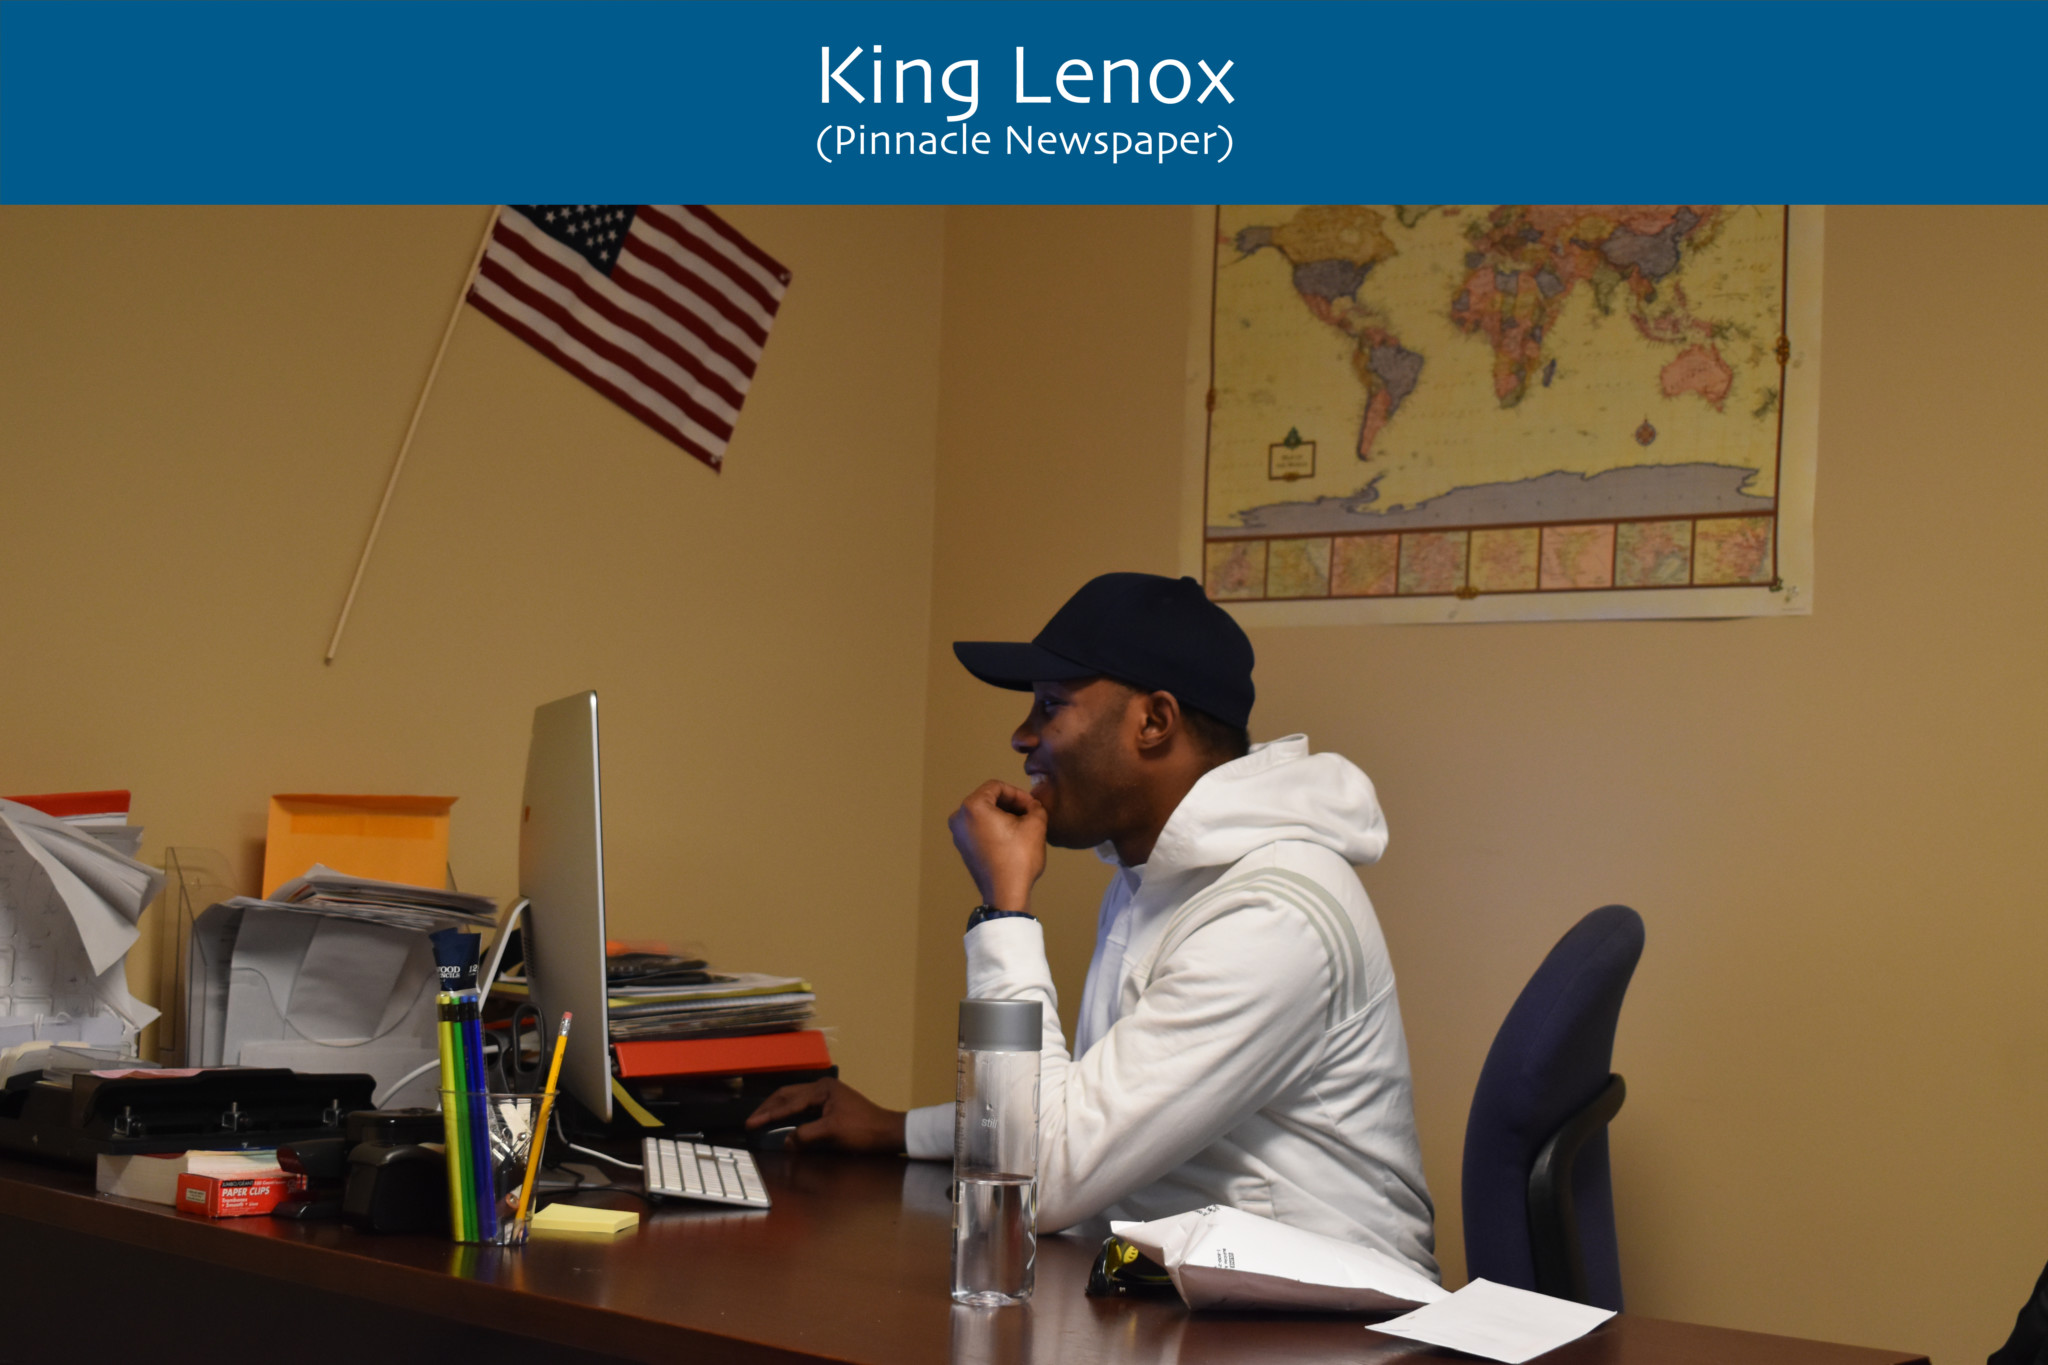 Lenox King : Pinnacle newsletter Executive Editor